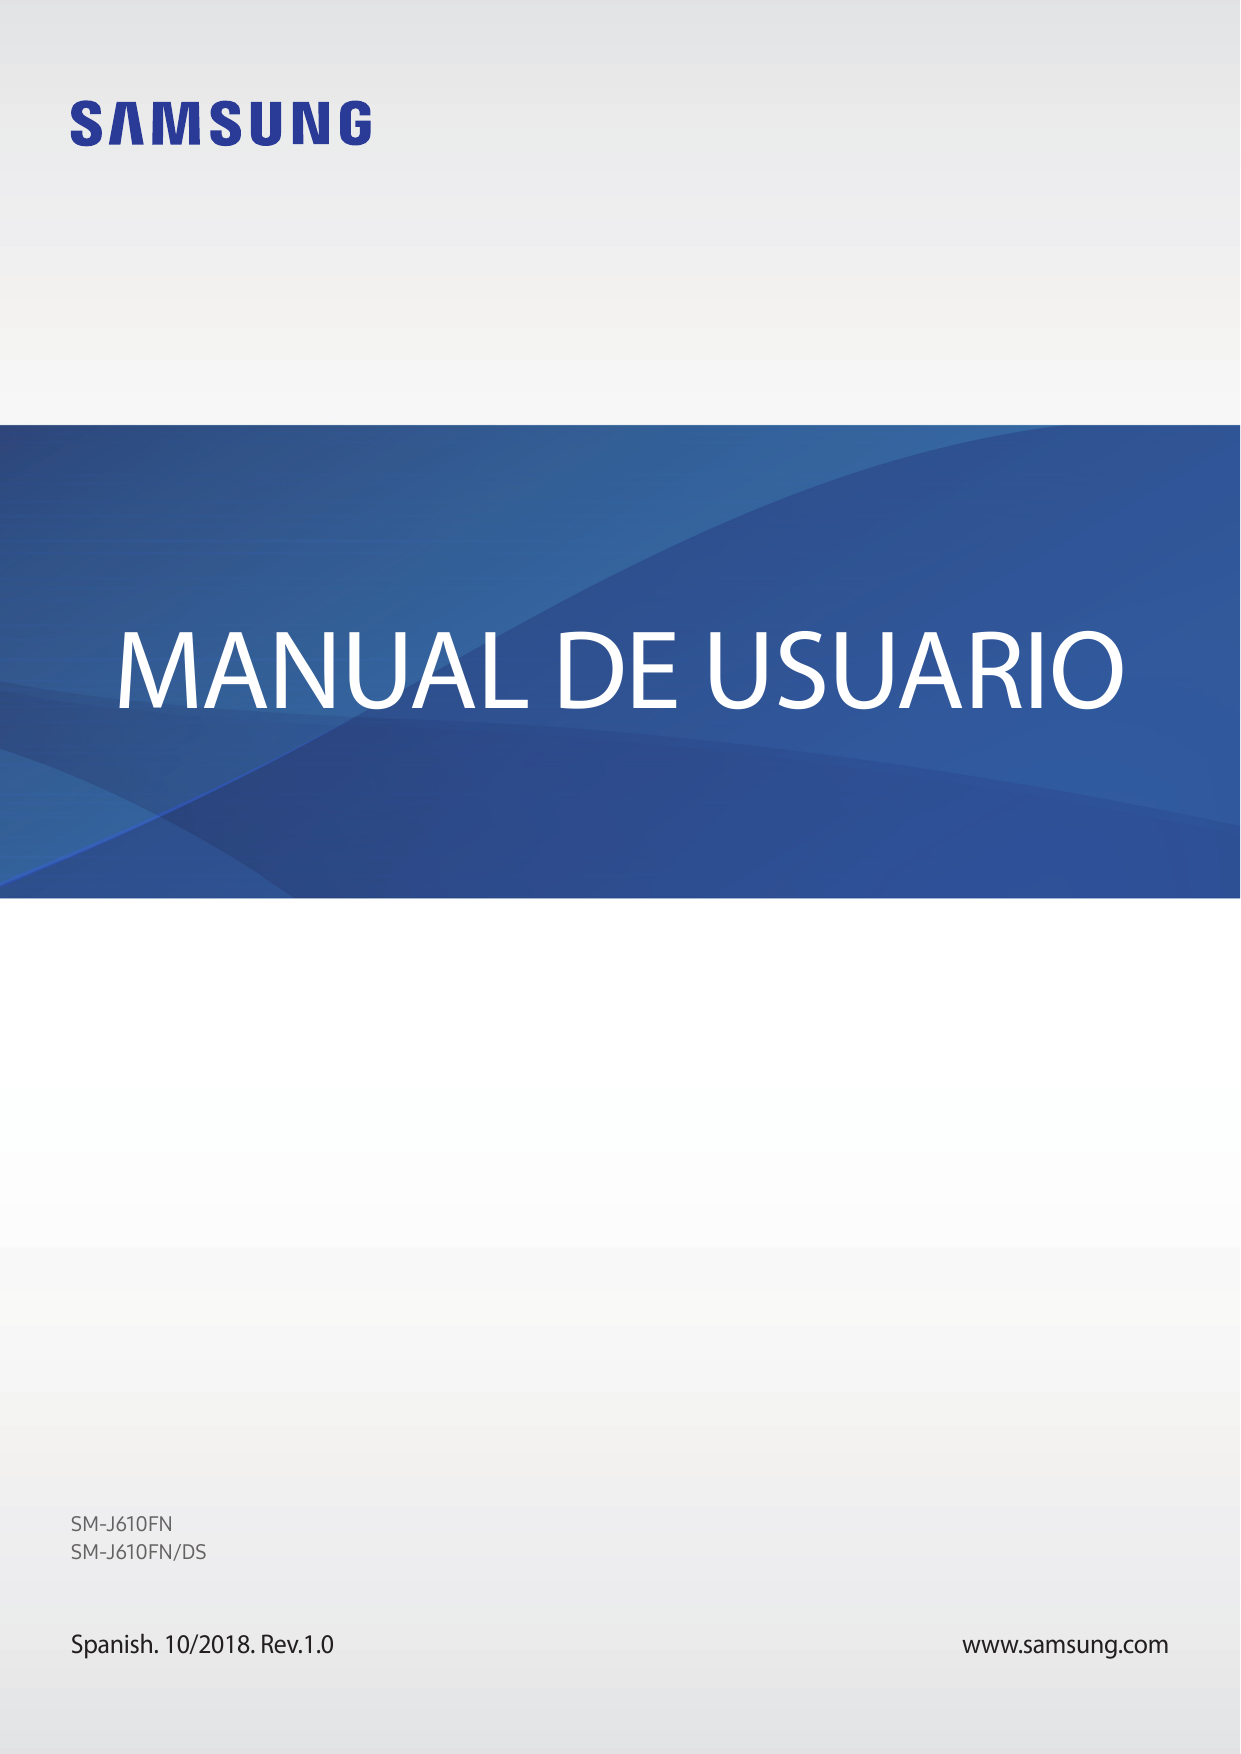 MANUAL DE USUARIOSM-J610FNSM-J610FN/DSSpanish. 10/2018. Rev.1.0www.samsung.com